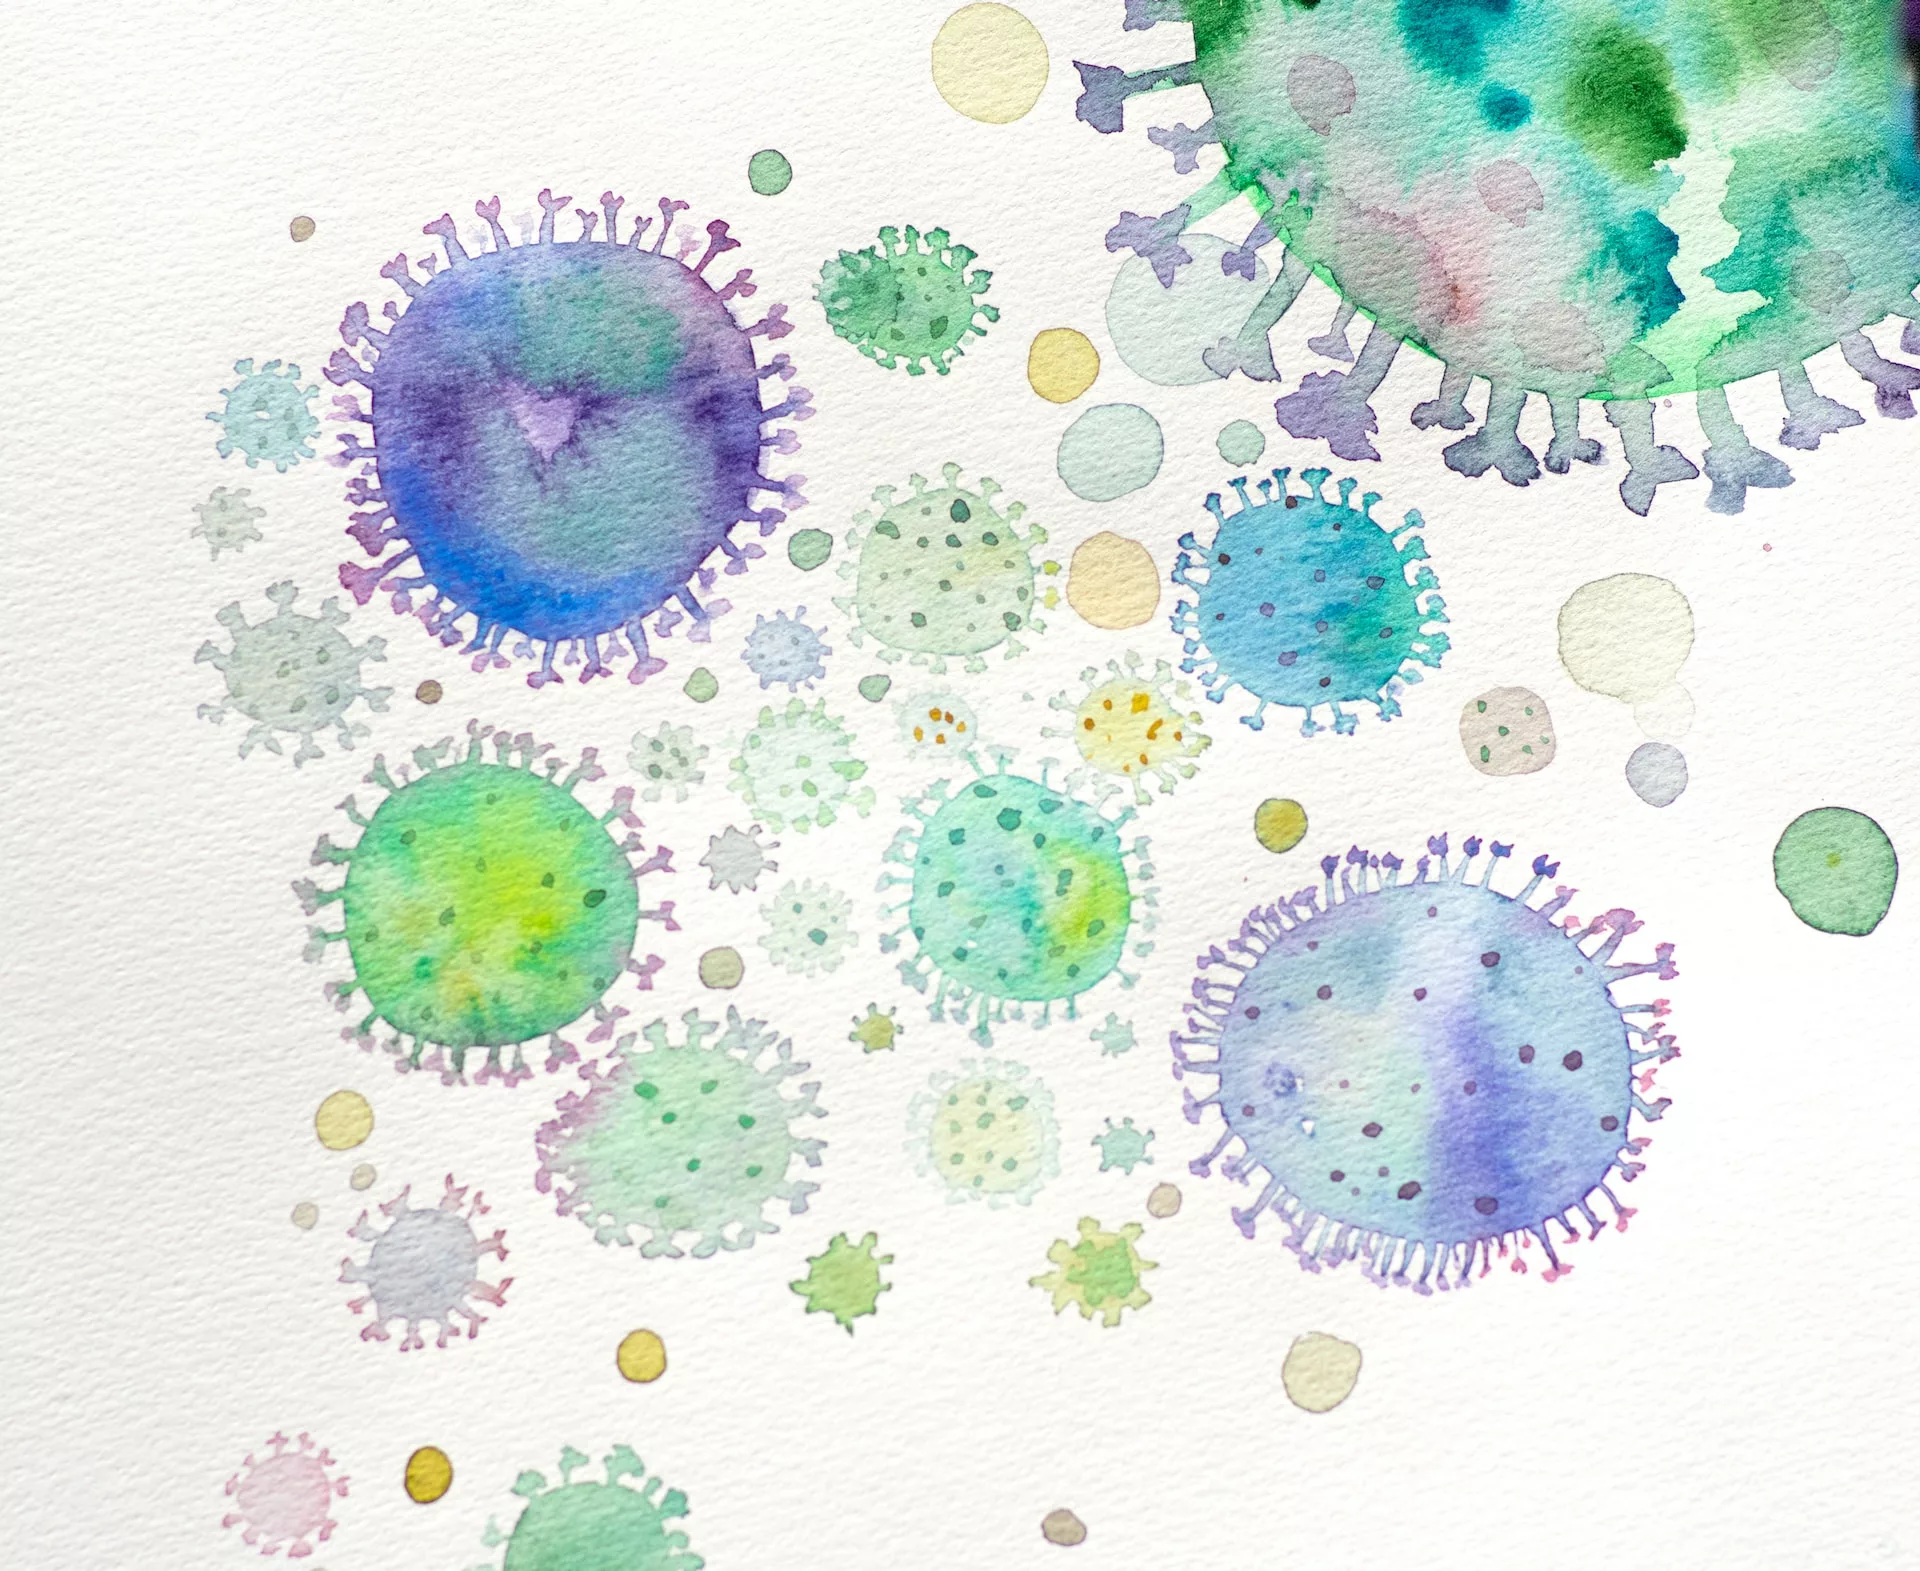 Watercolour bacteria mimic